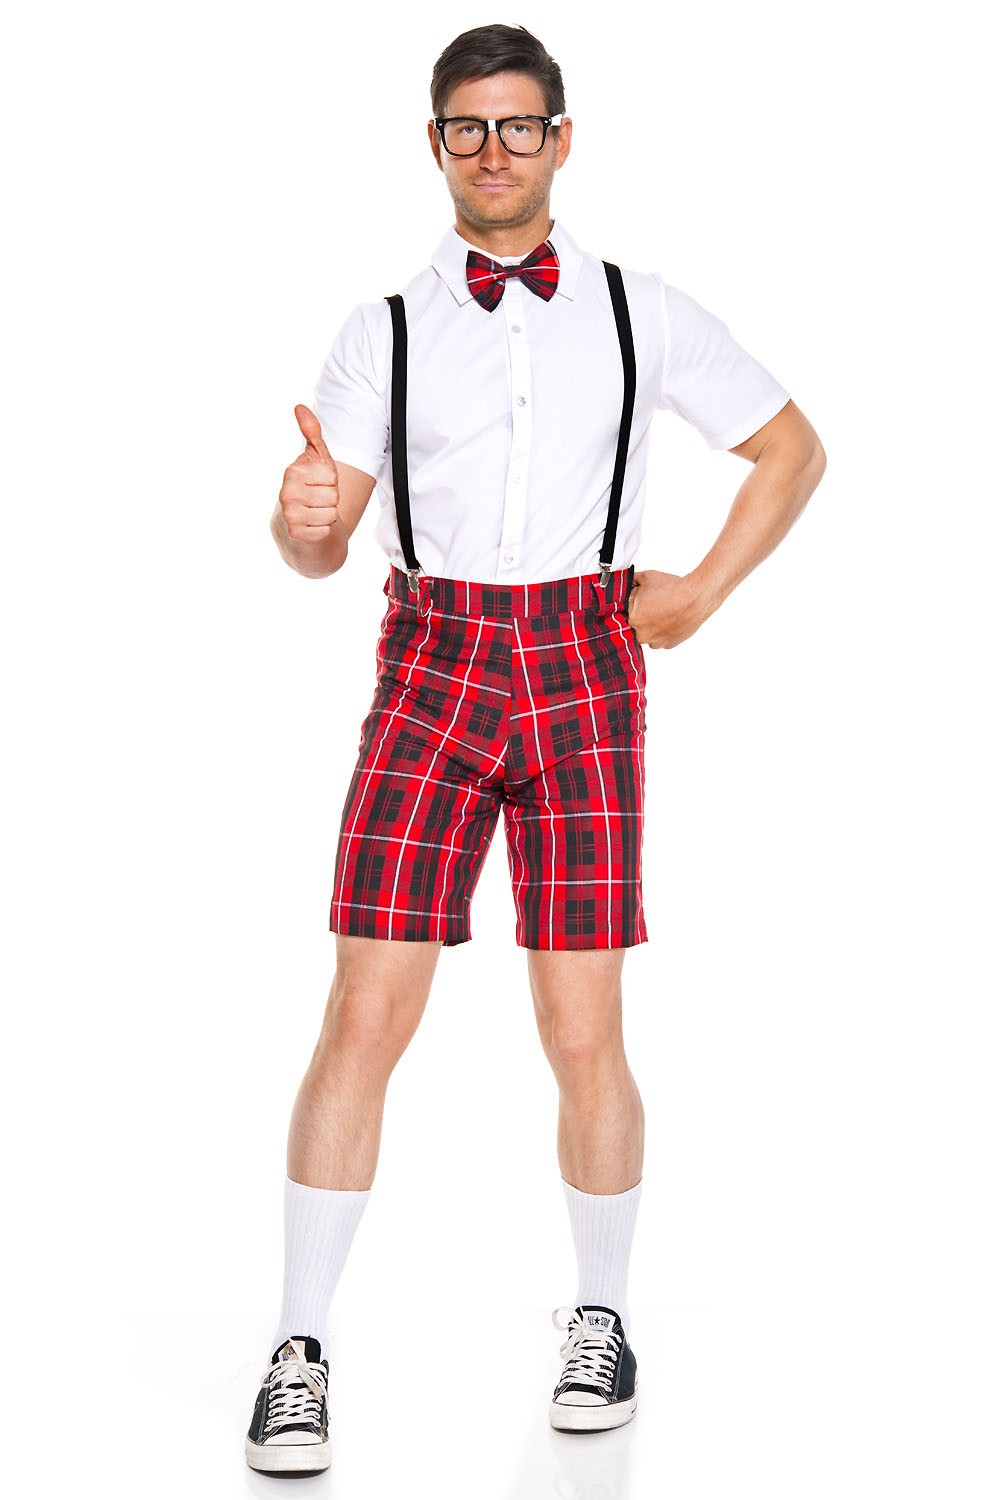 Profeta proteccion Estresante Adult Classroom Nerd Men Costume Red | $38.99 | The Costume Land